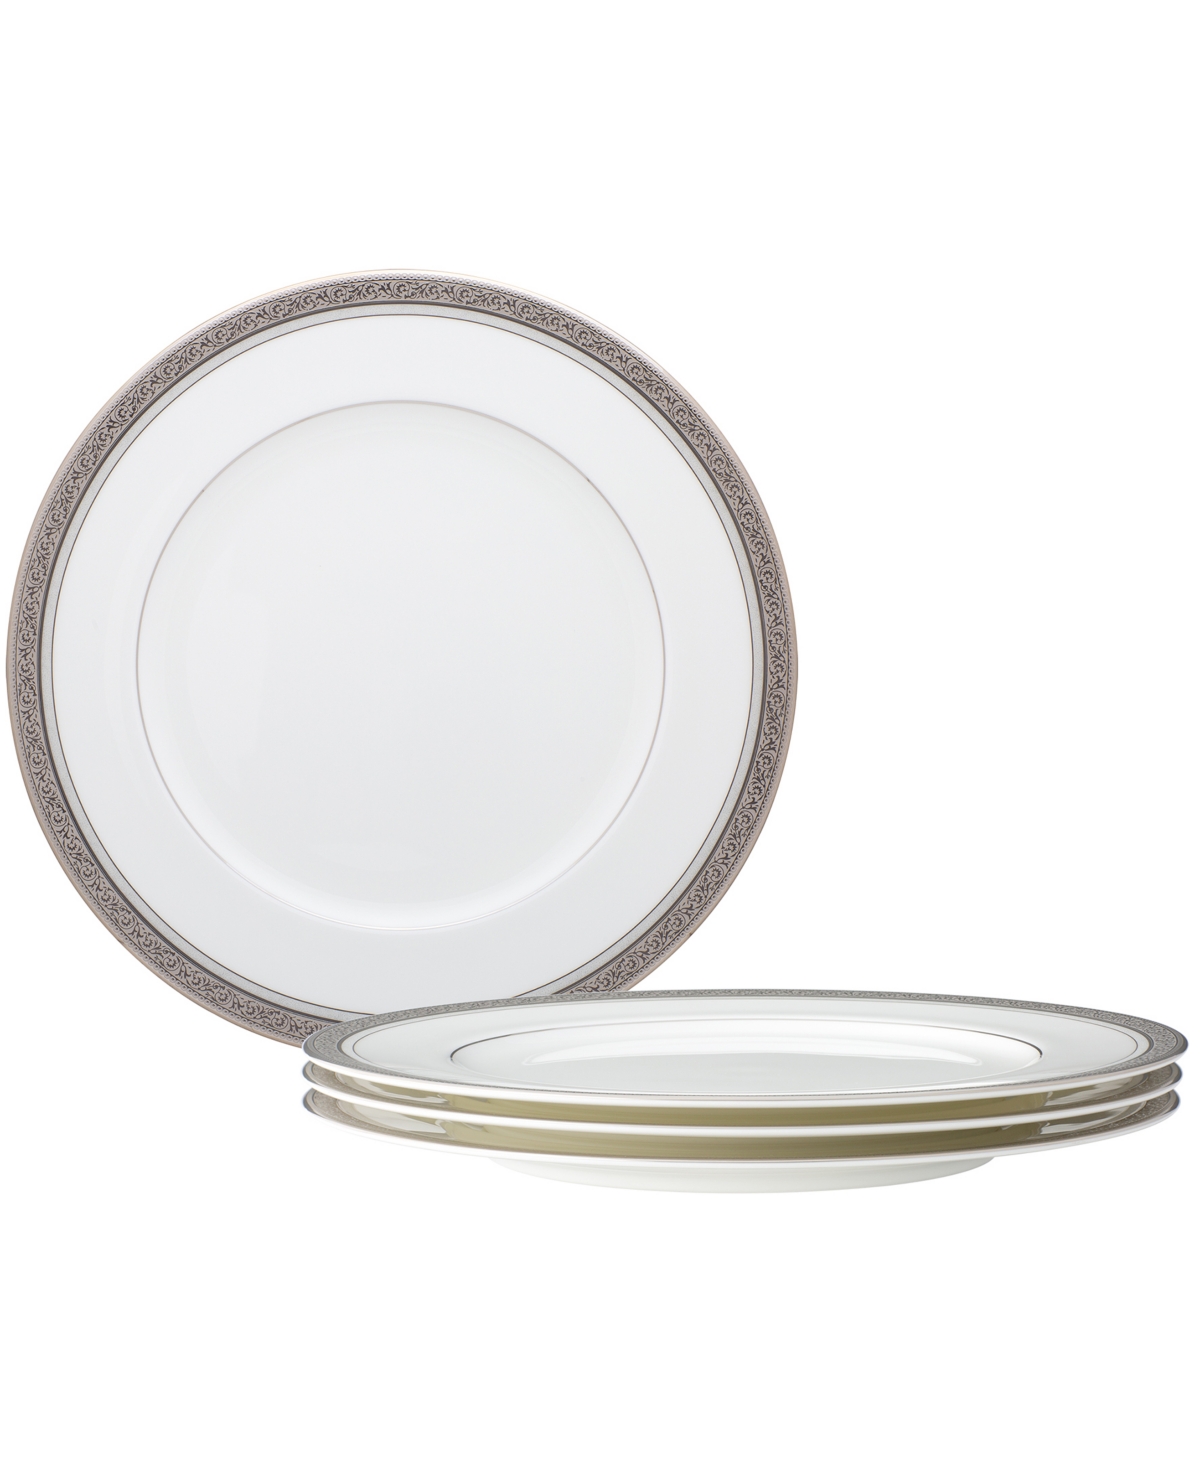 Noritake Summit Platinum Set Of 4 Dinner Plates, Service For 4 In White